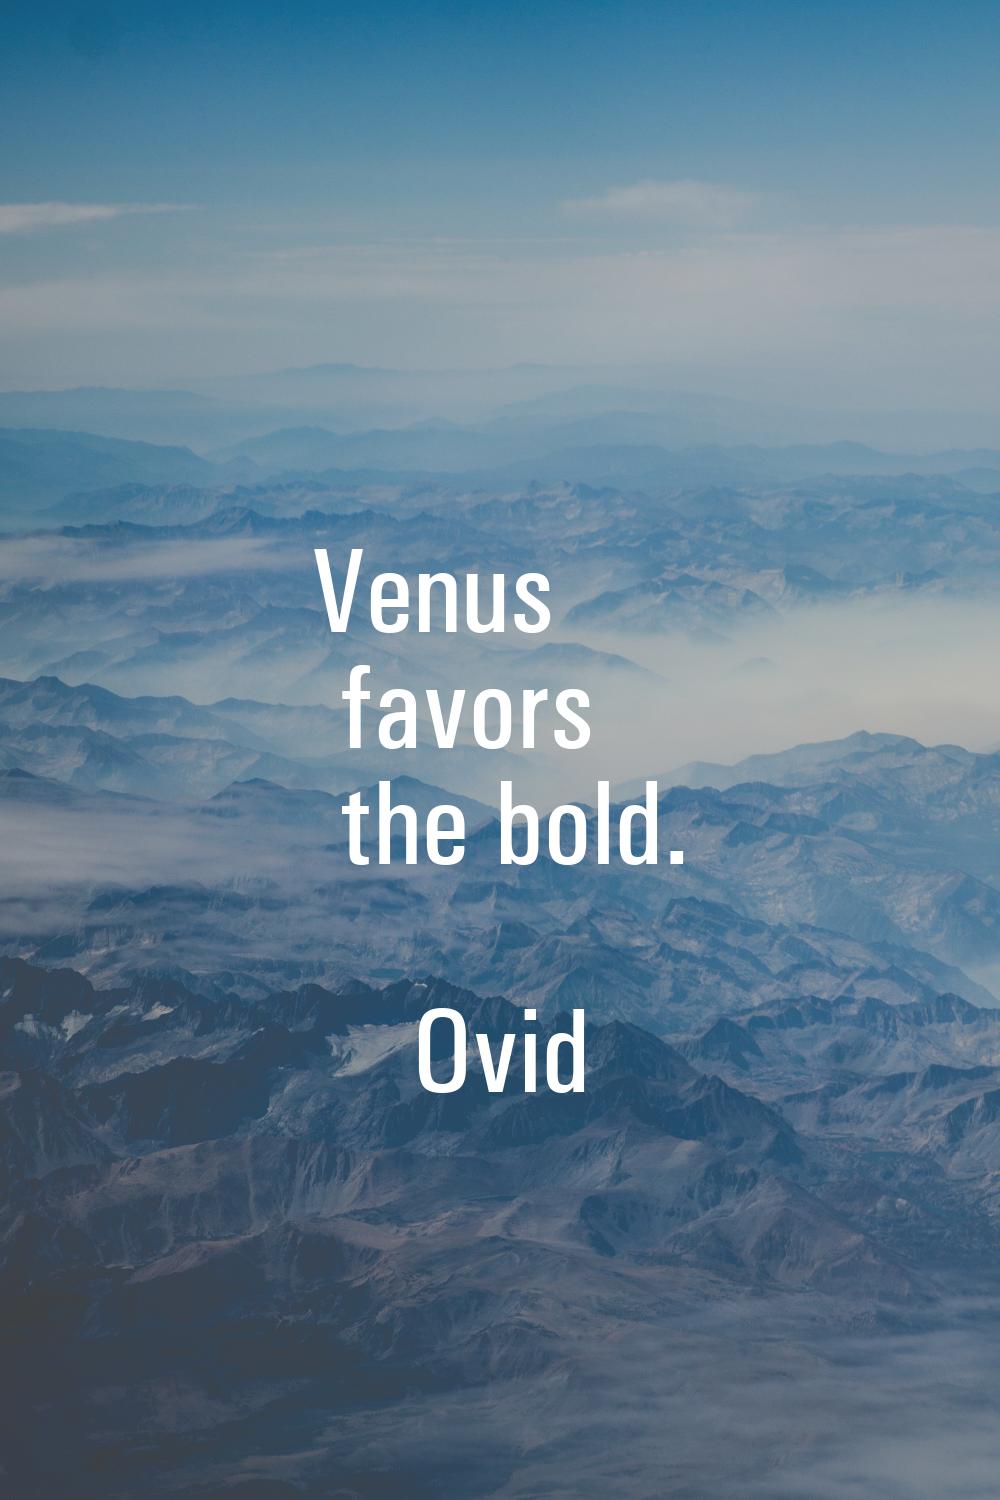 Venus favors the bold.